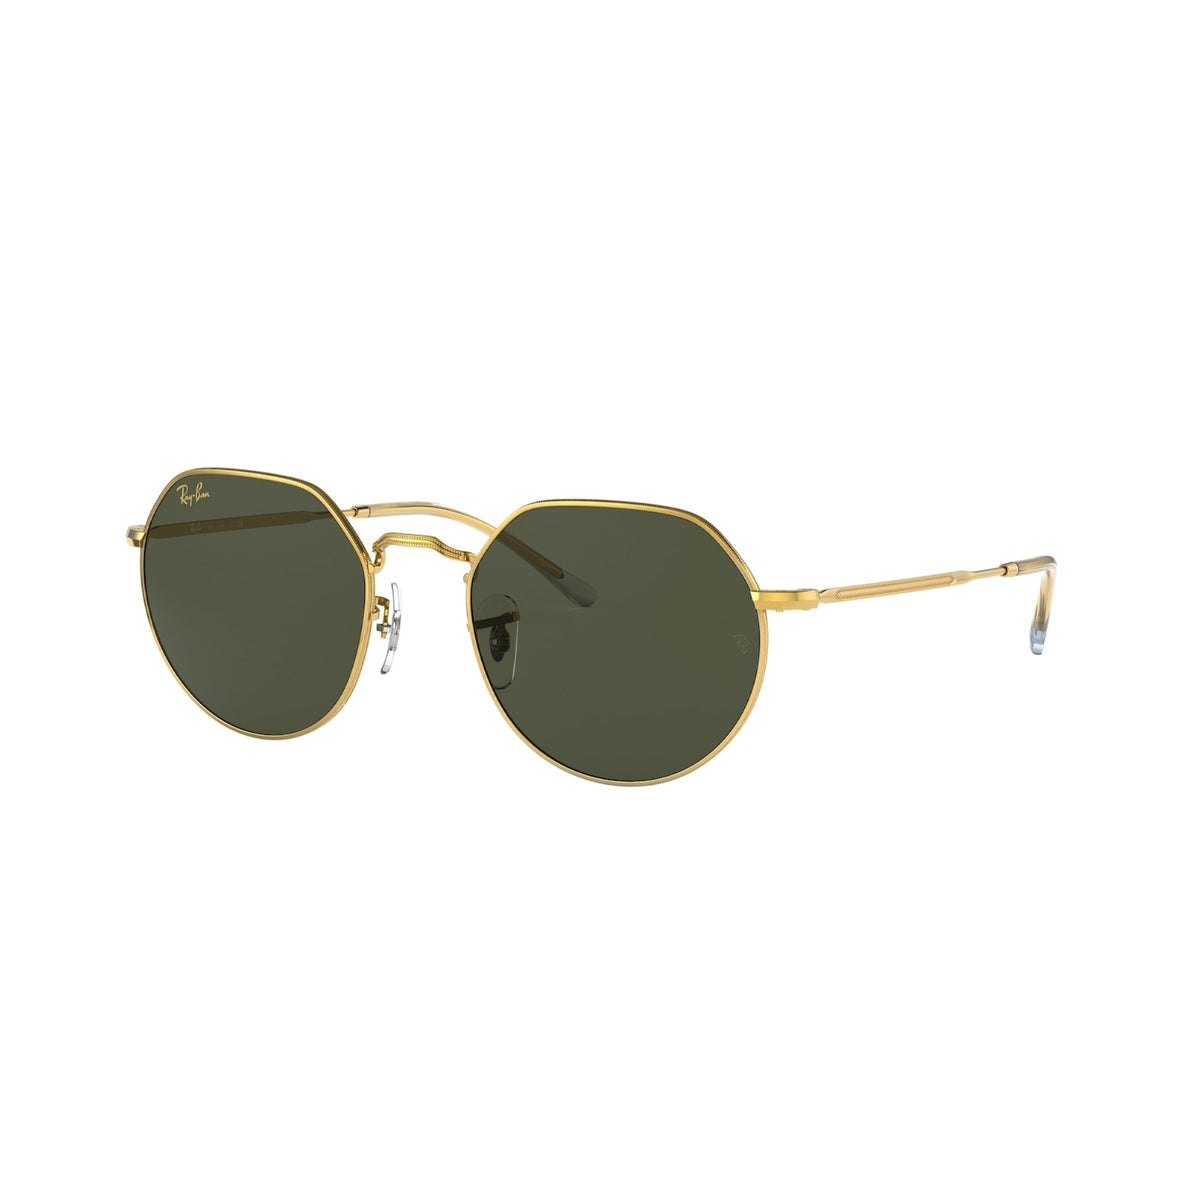 Ray-Ban Unisex Sunglasses Jack Gold Green Metal Metal  0RB3565 919631 51